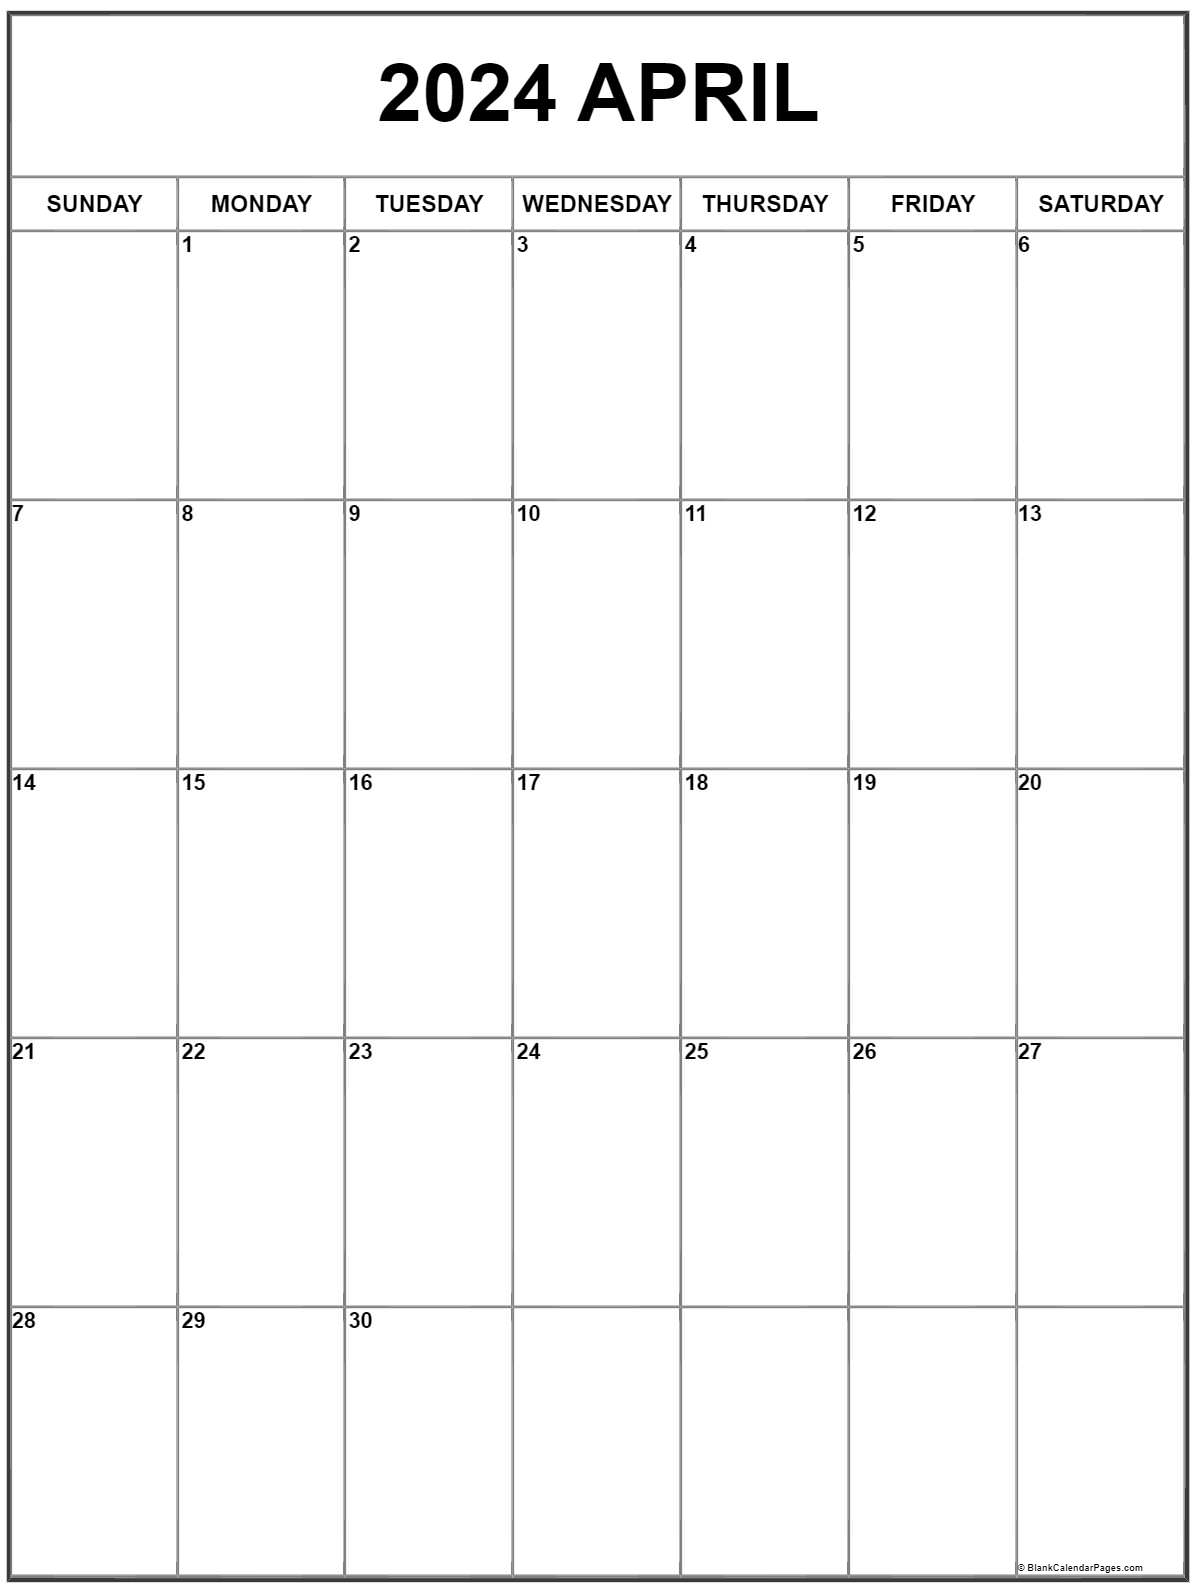 april 2023 calendar free printable calendar april 2023 calendar free